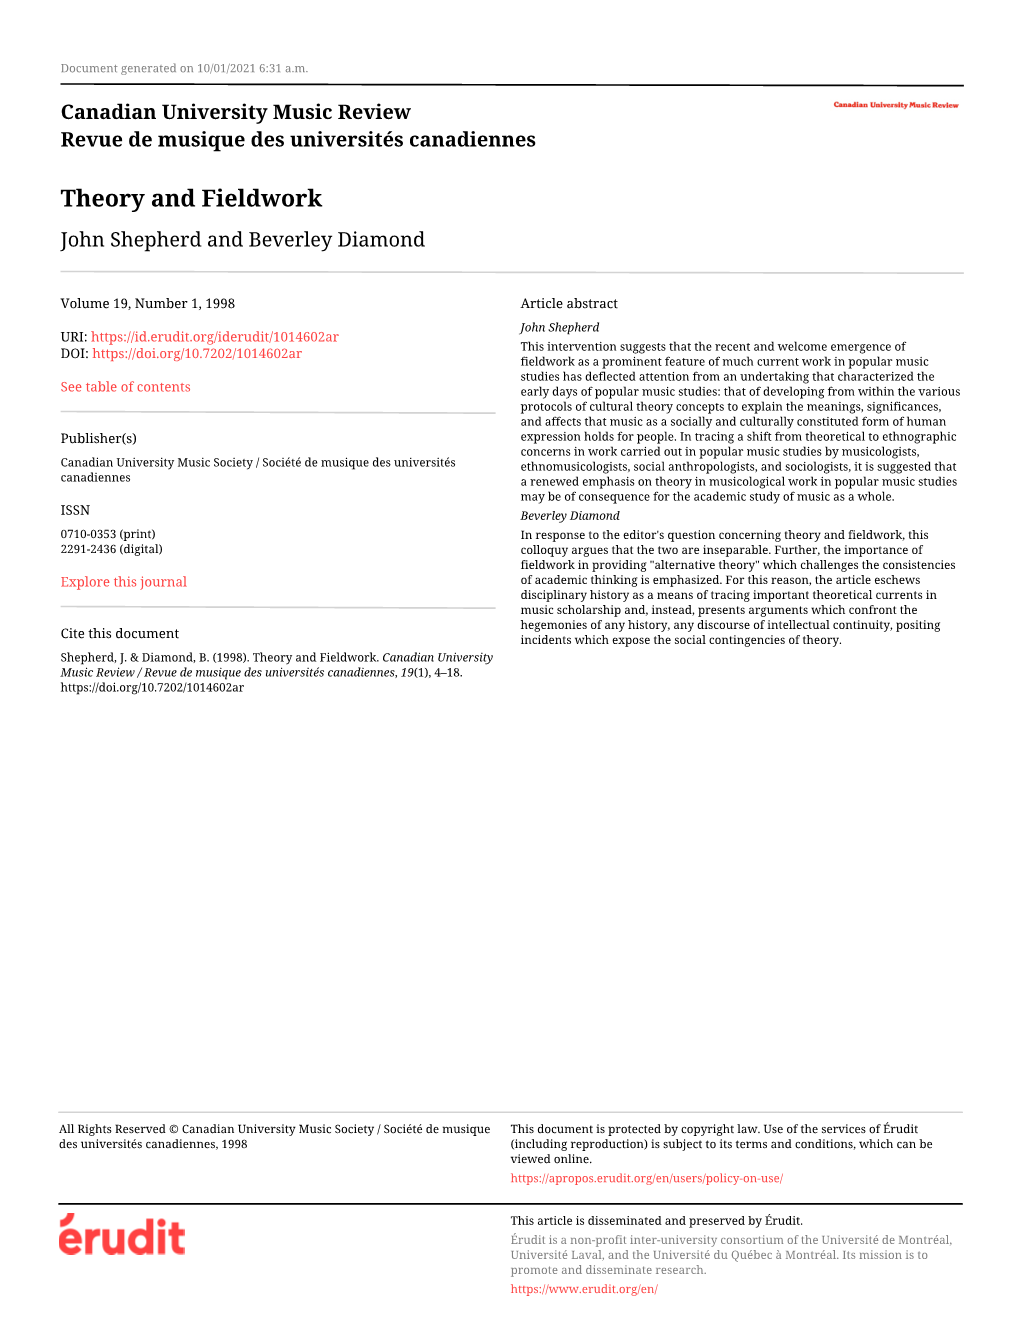 Theory and Fieldwork John Shepherd and Beverley Diamond